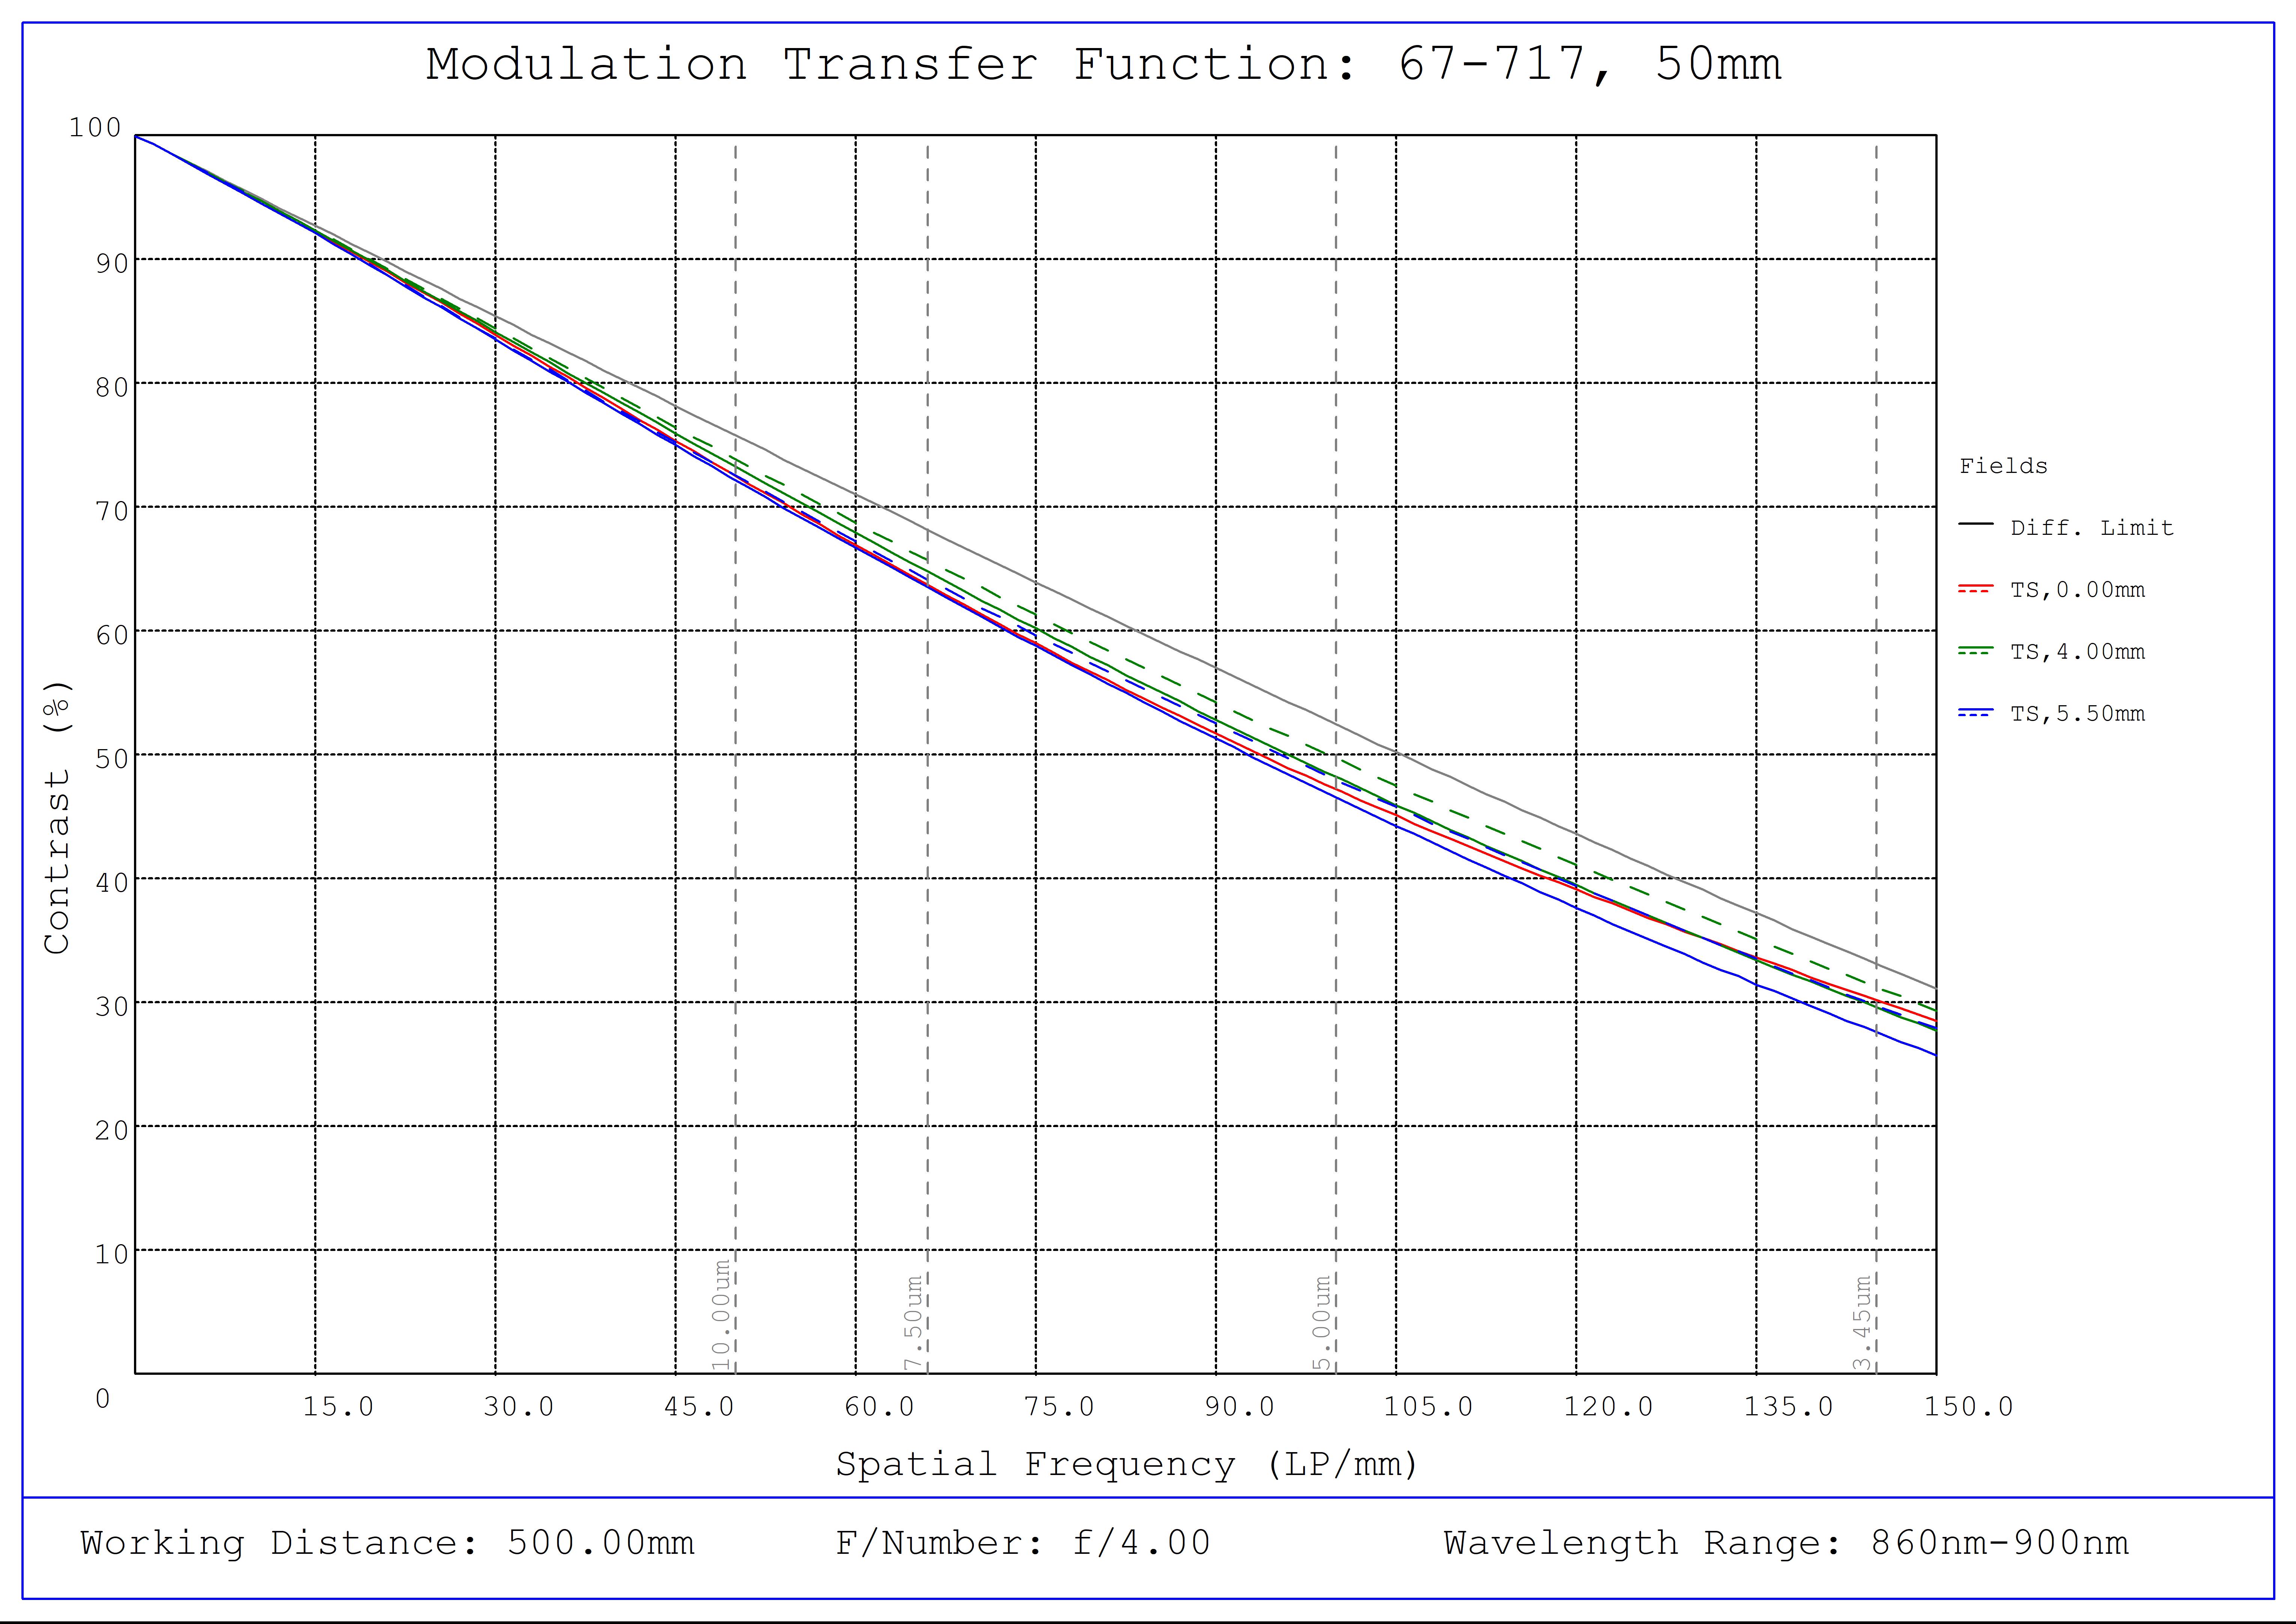 #67-717, 50mm C VIS-NIR Series Fixed Focal Length Lens, Modulated Transfer Function (MTF) Plot (NIR), 500mm Working Distance, f4